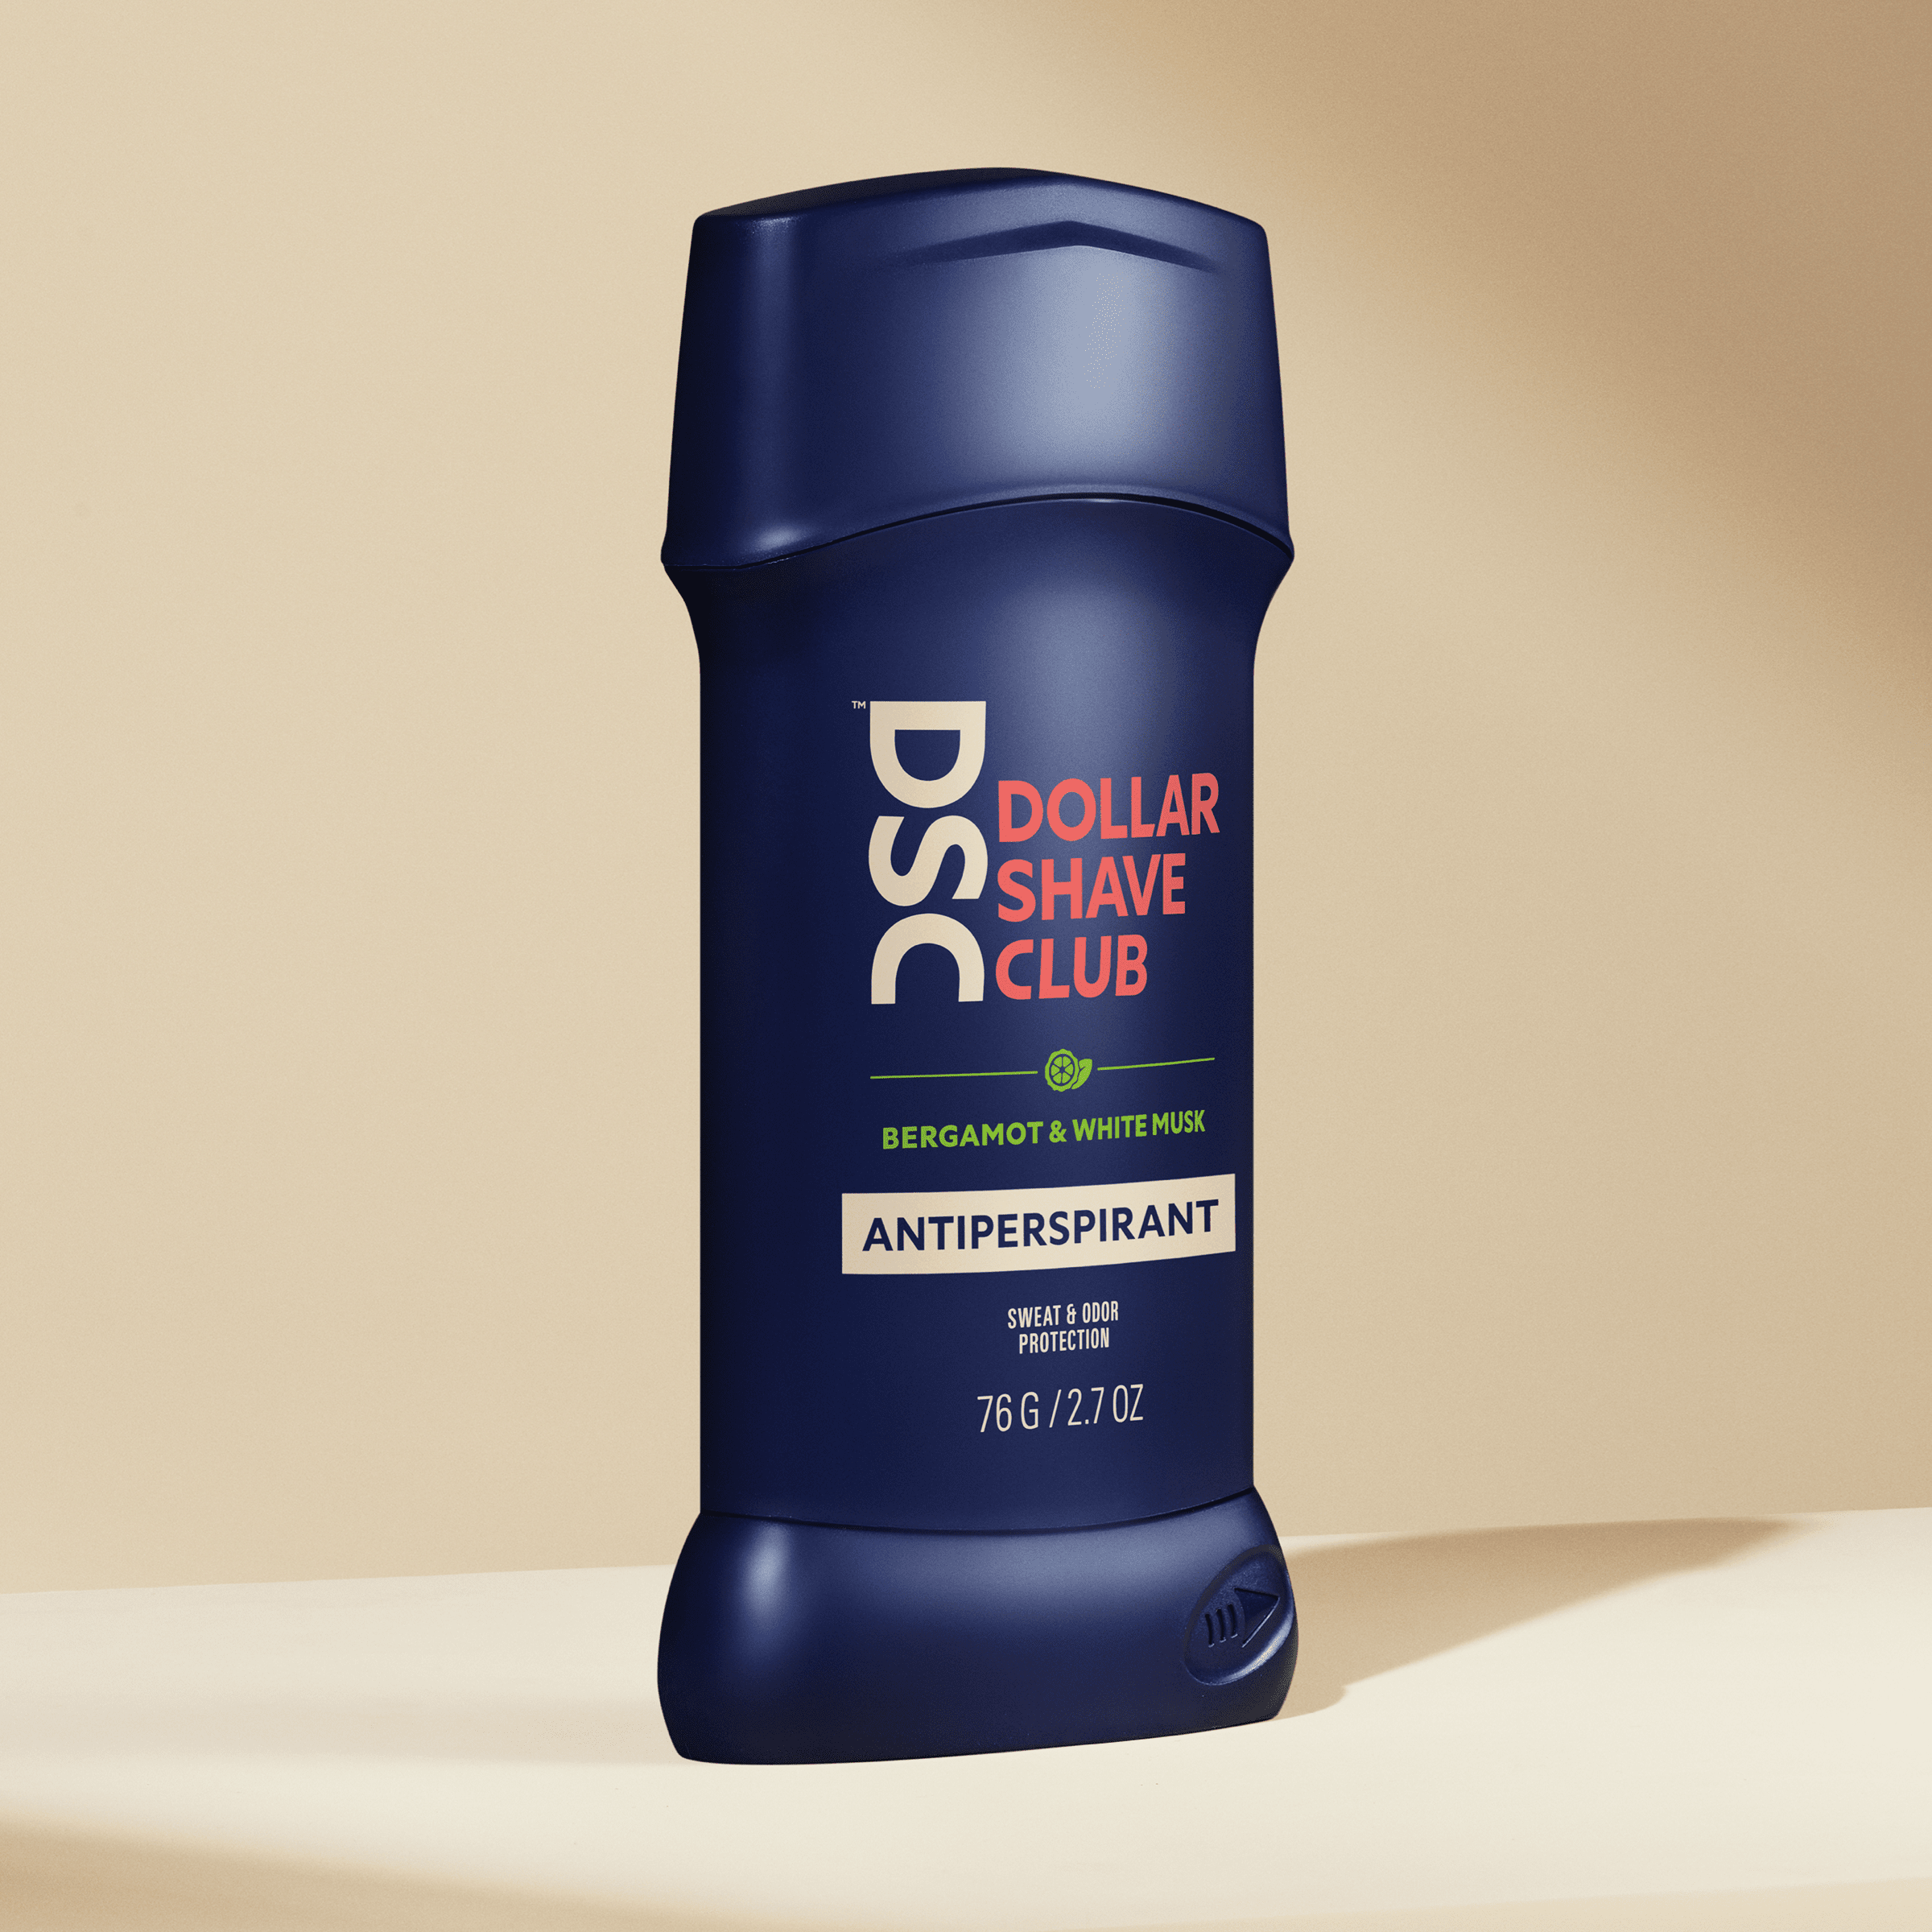 Dollar Shave Club Antiperspirant Sea Spray Amber against tan backdrop.